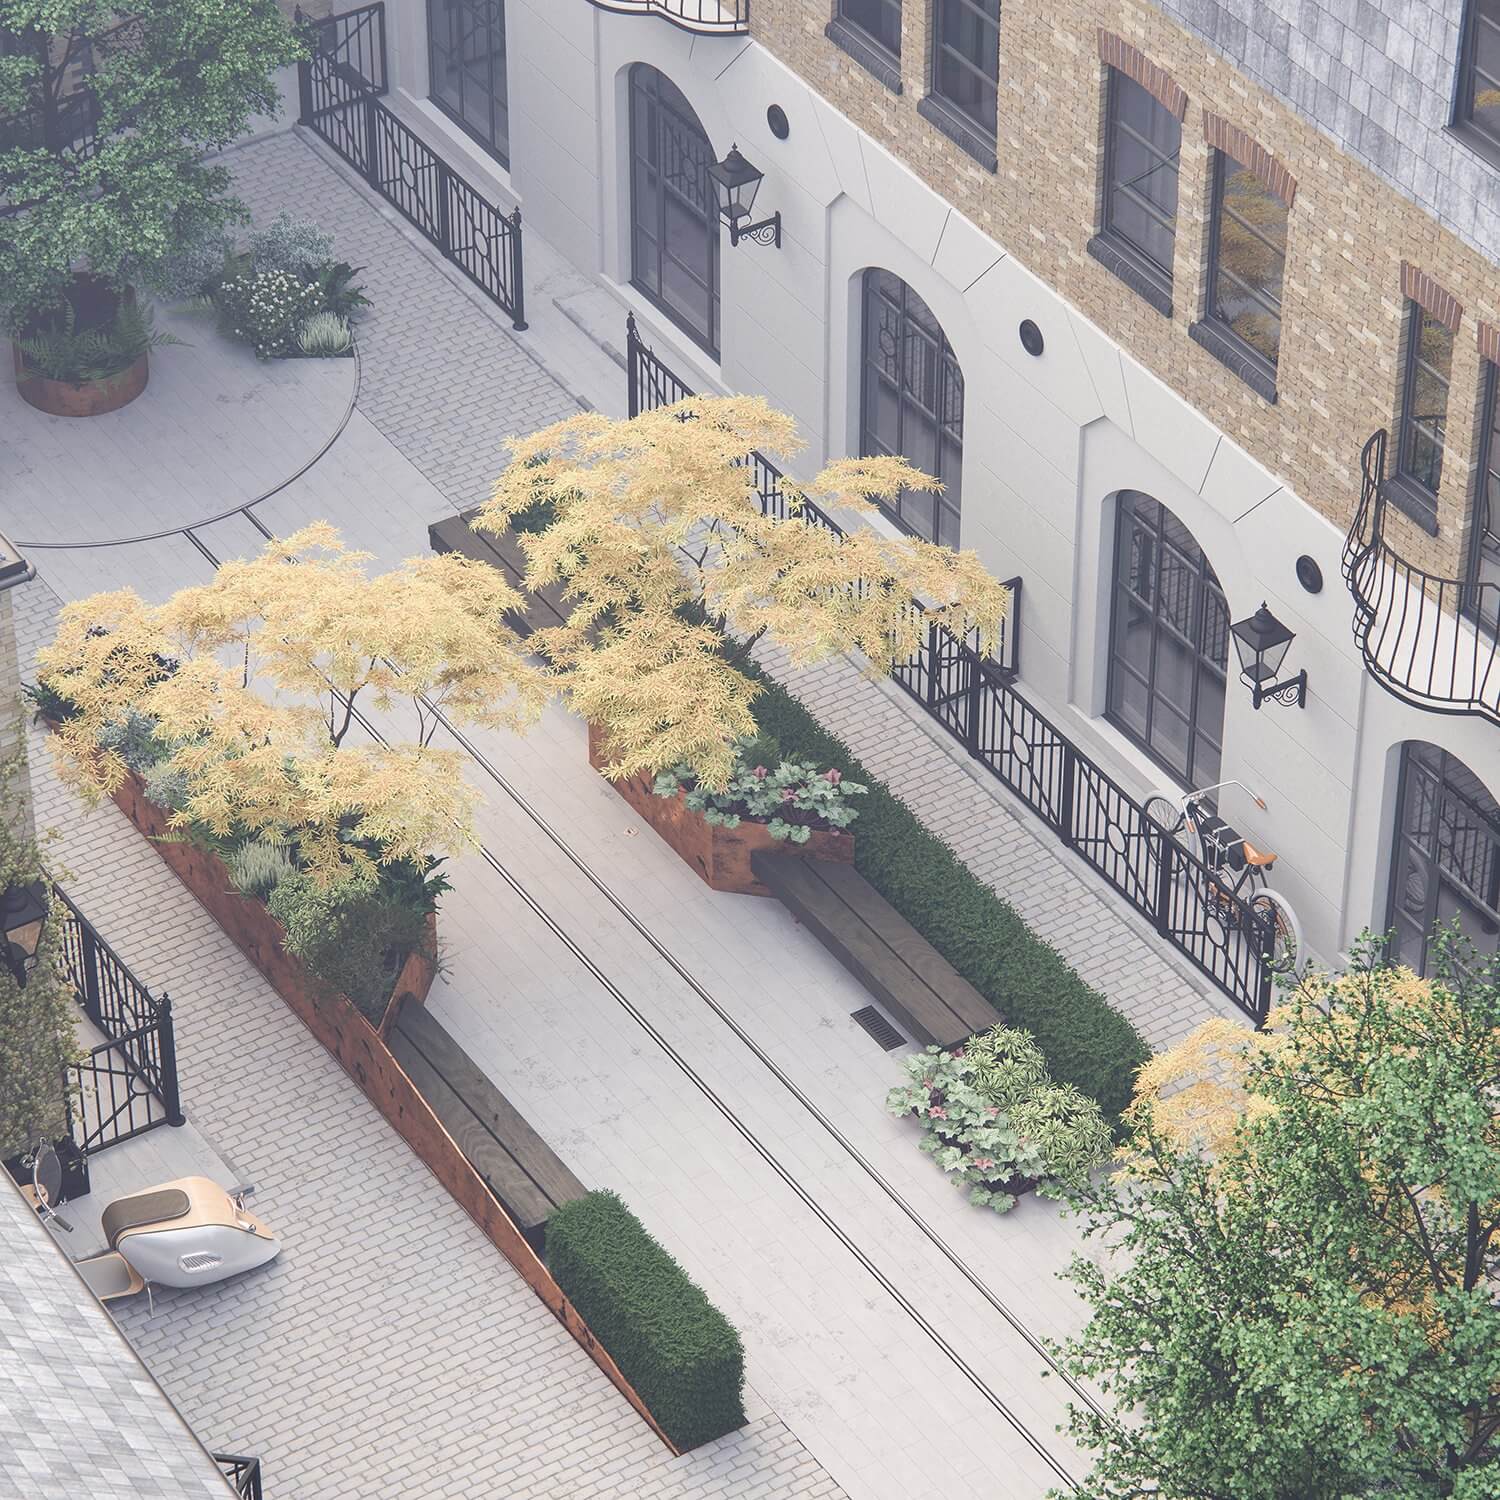 7 Old Town Clapham Apartment courtyard - cgi visualization